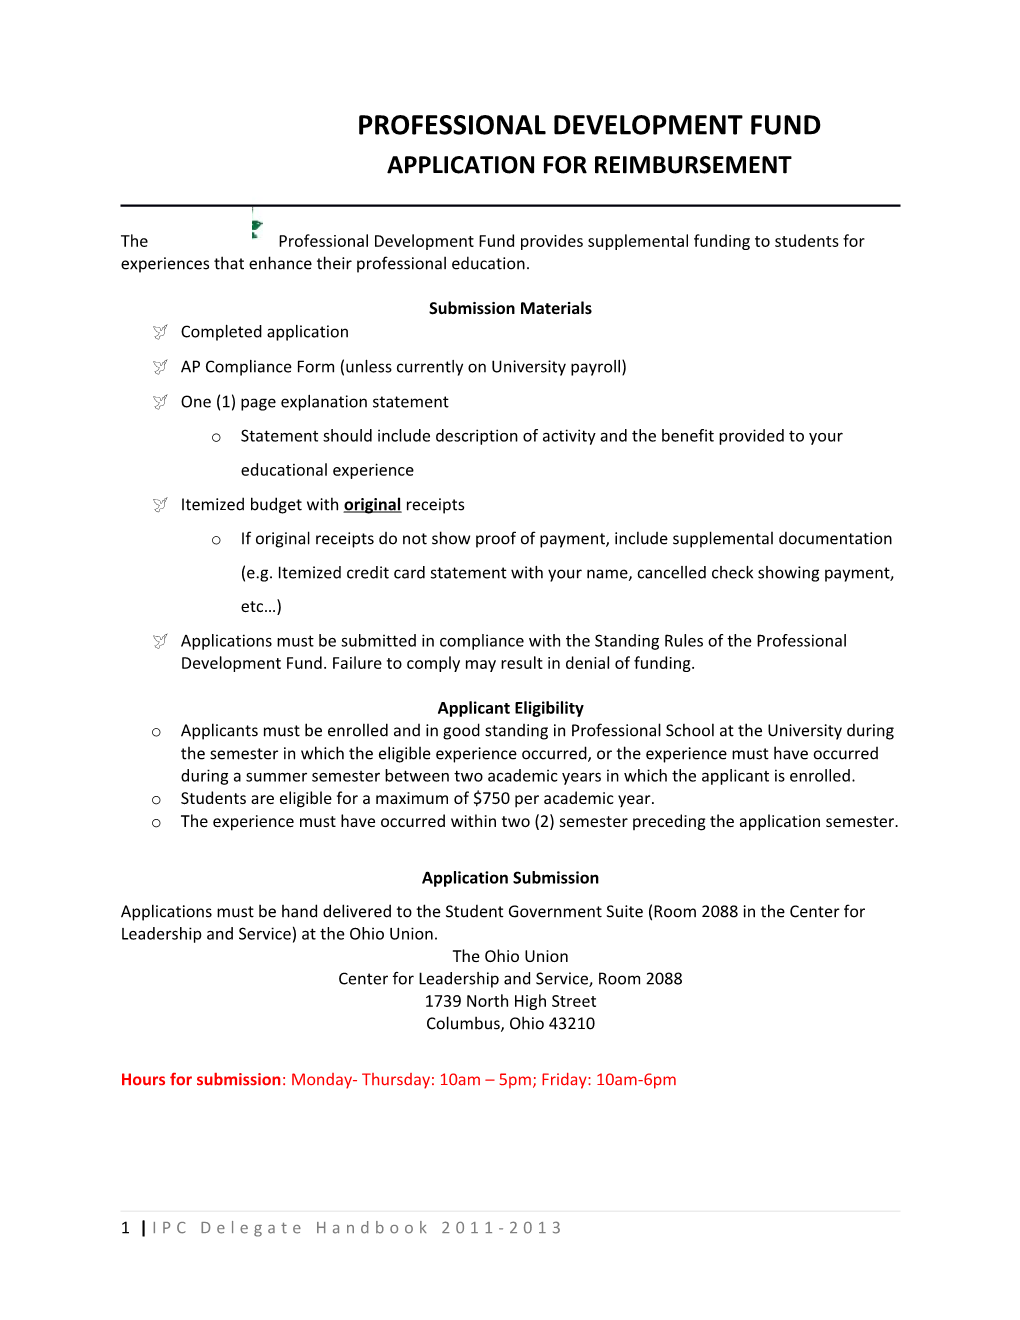 Application for Reimbursement s1